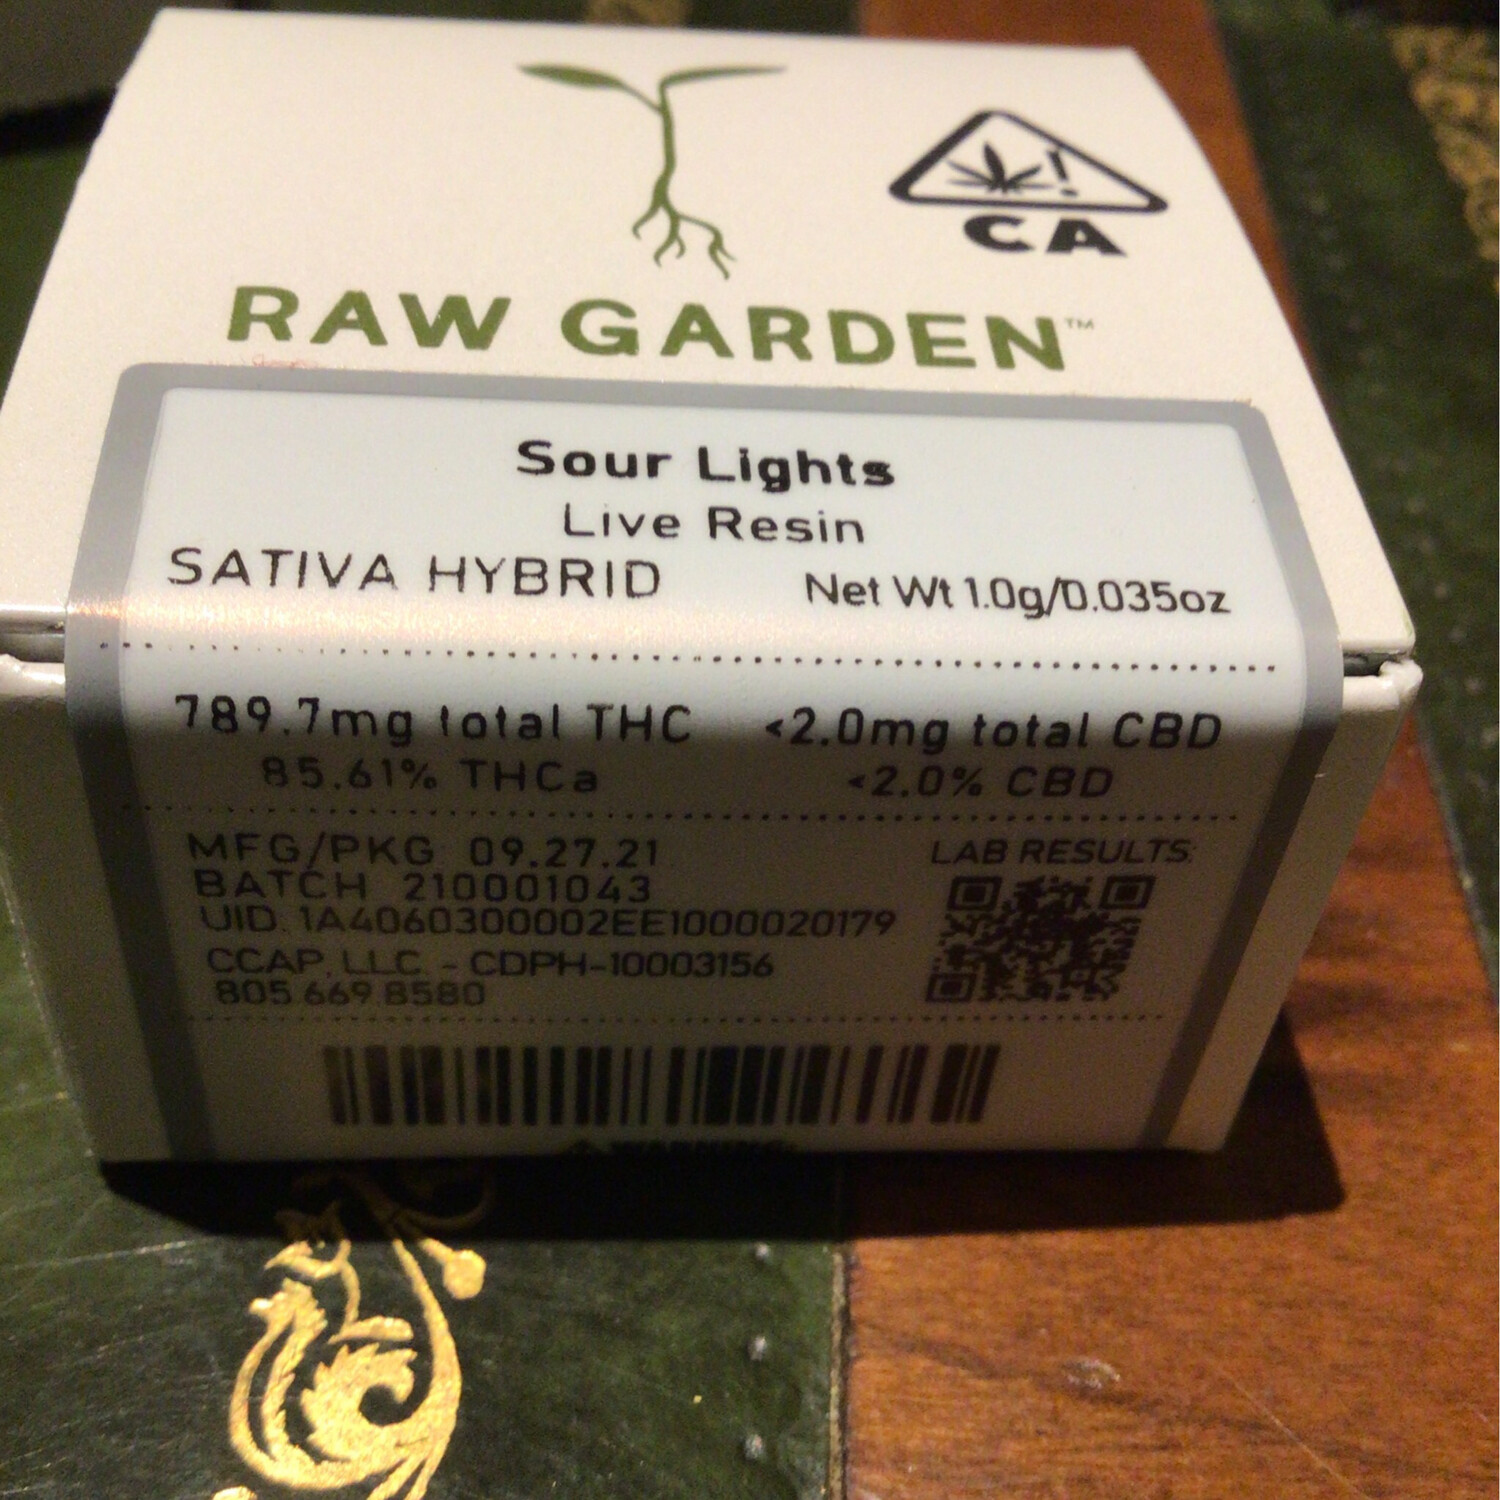 RG Sour Lights Live Resin (SAT, Hybrid 85.61%  THC